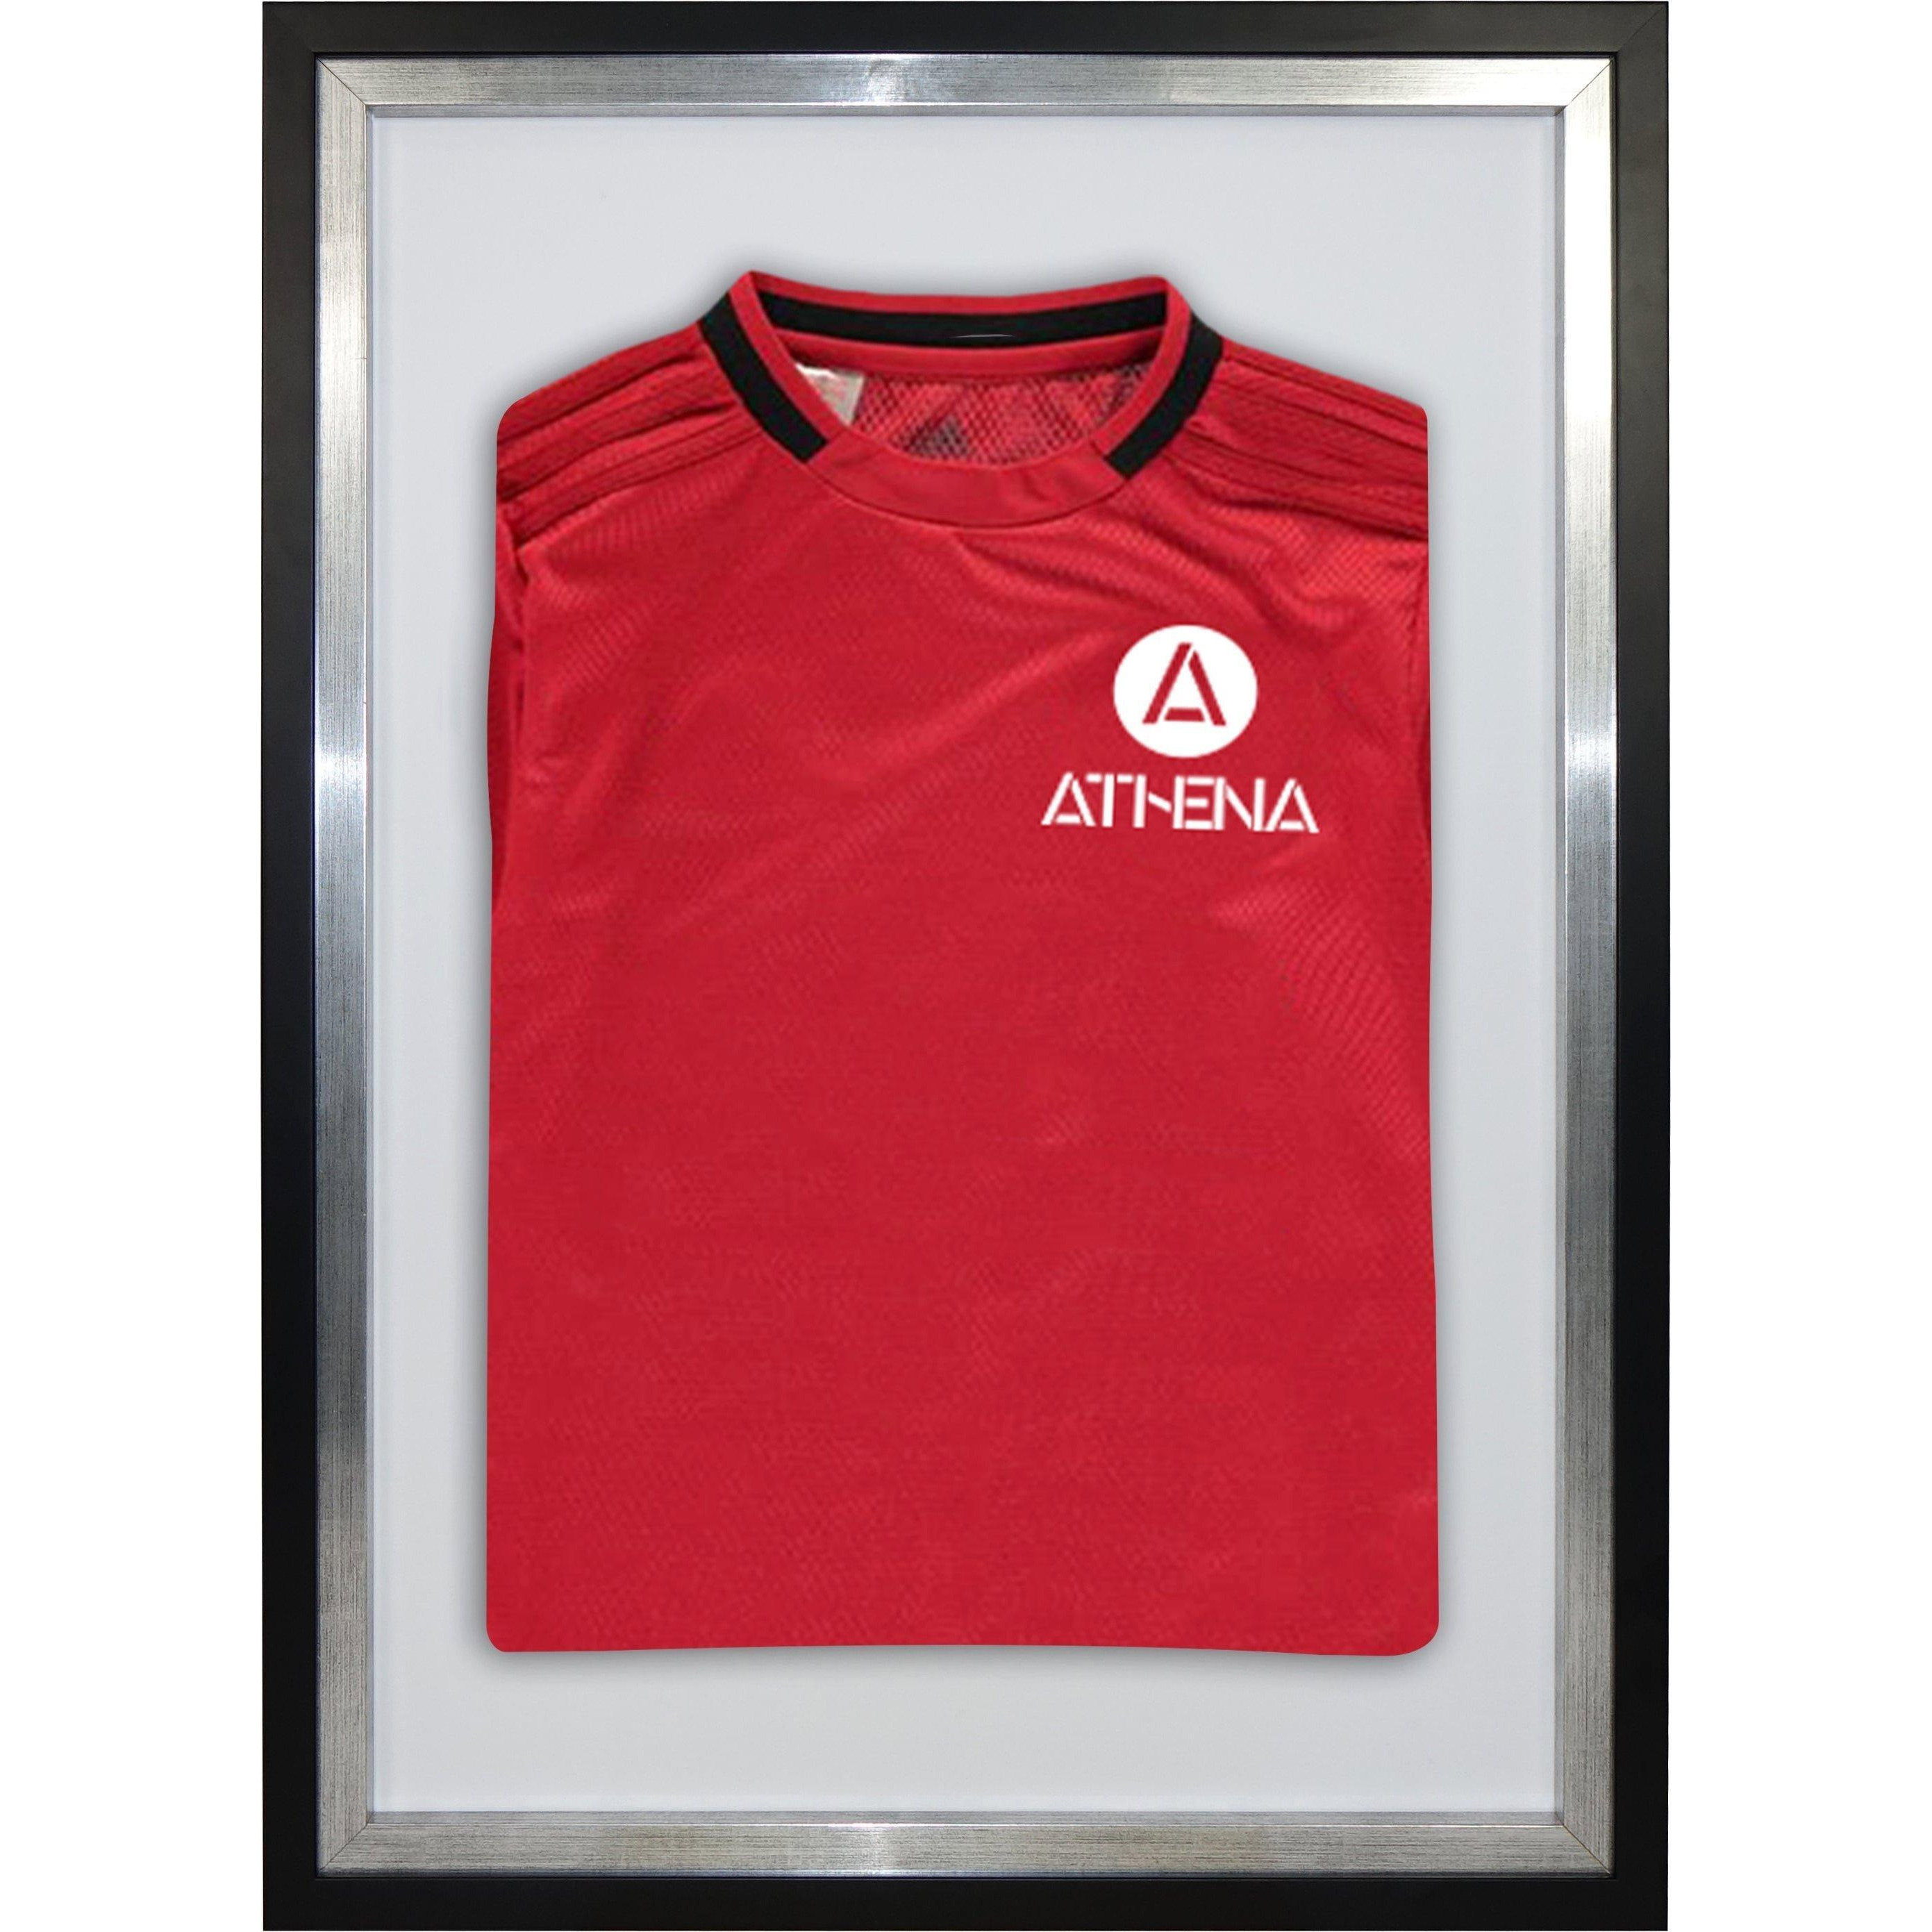 Athena Standard Mounted Sports Shirt Display Frame with Black Frame and Platinum Inner Frame 50 x 70cm